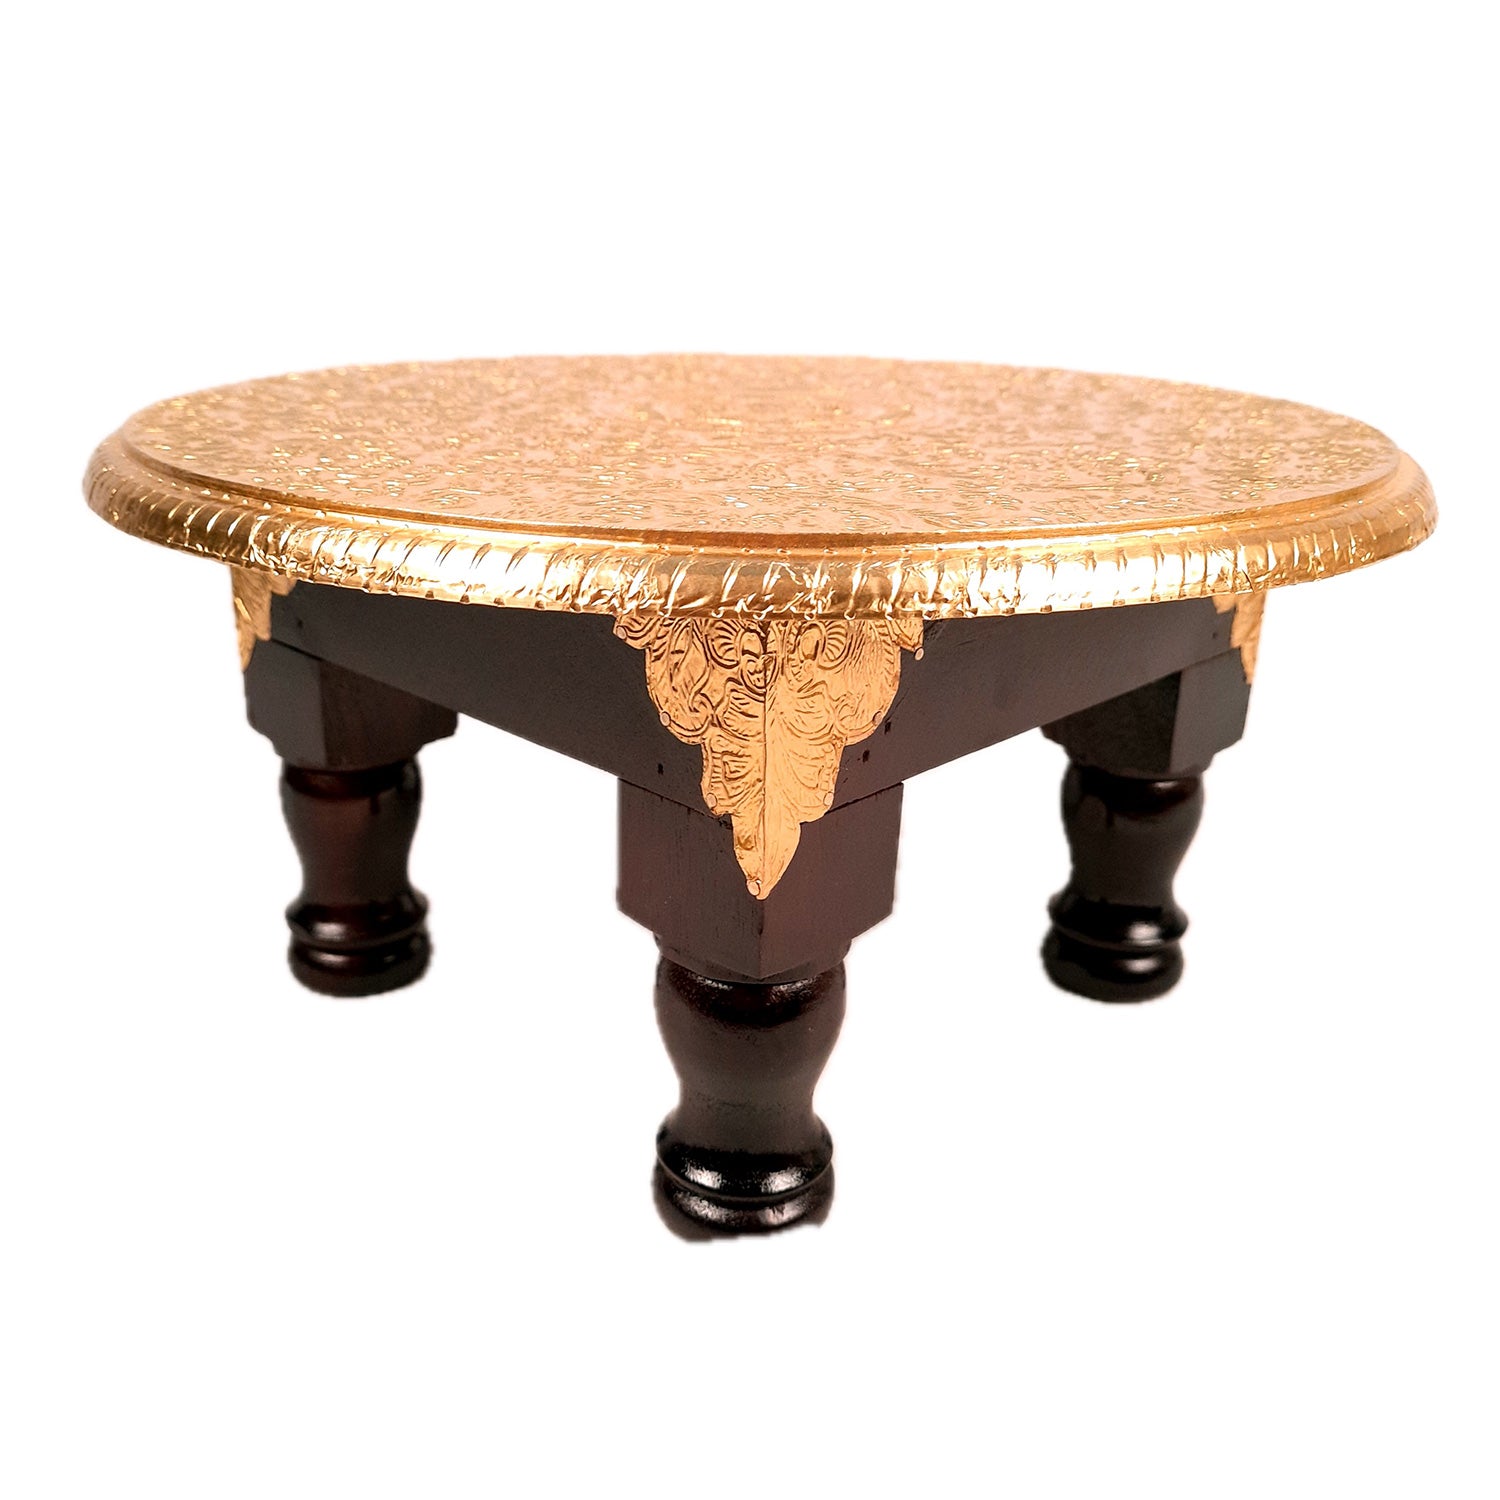 Puja Chowki Bajot | Wooden Brass Chauki | Peeta / Patla for Sitting - For Pooja, Living Room, Home & Corner Decor - 13 Inch